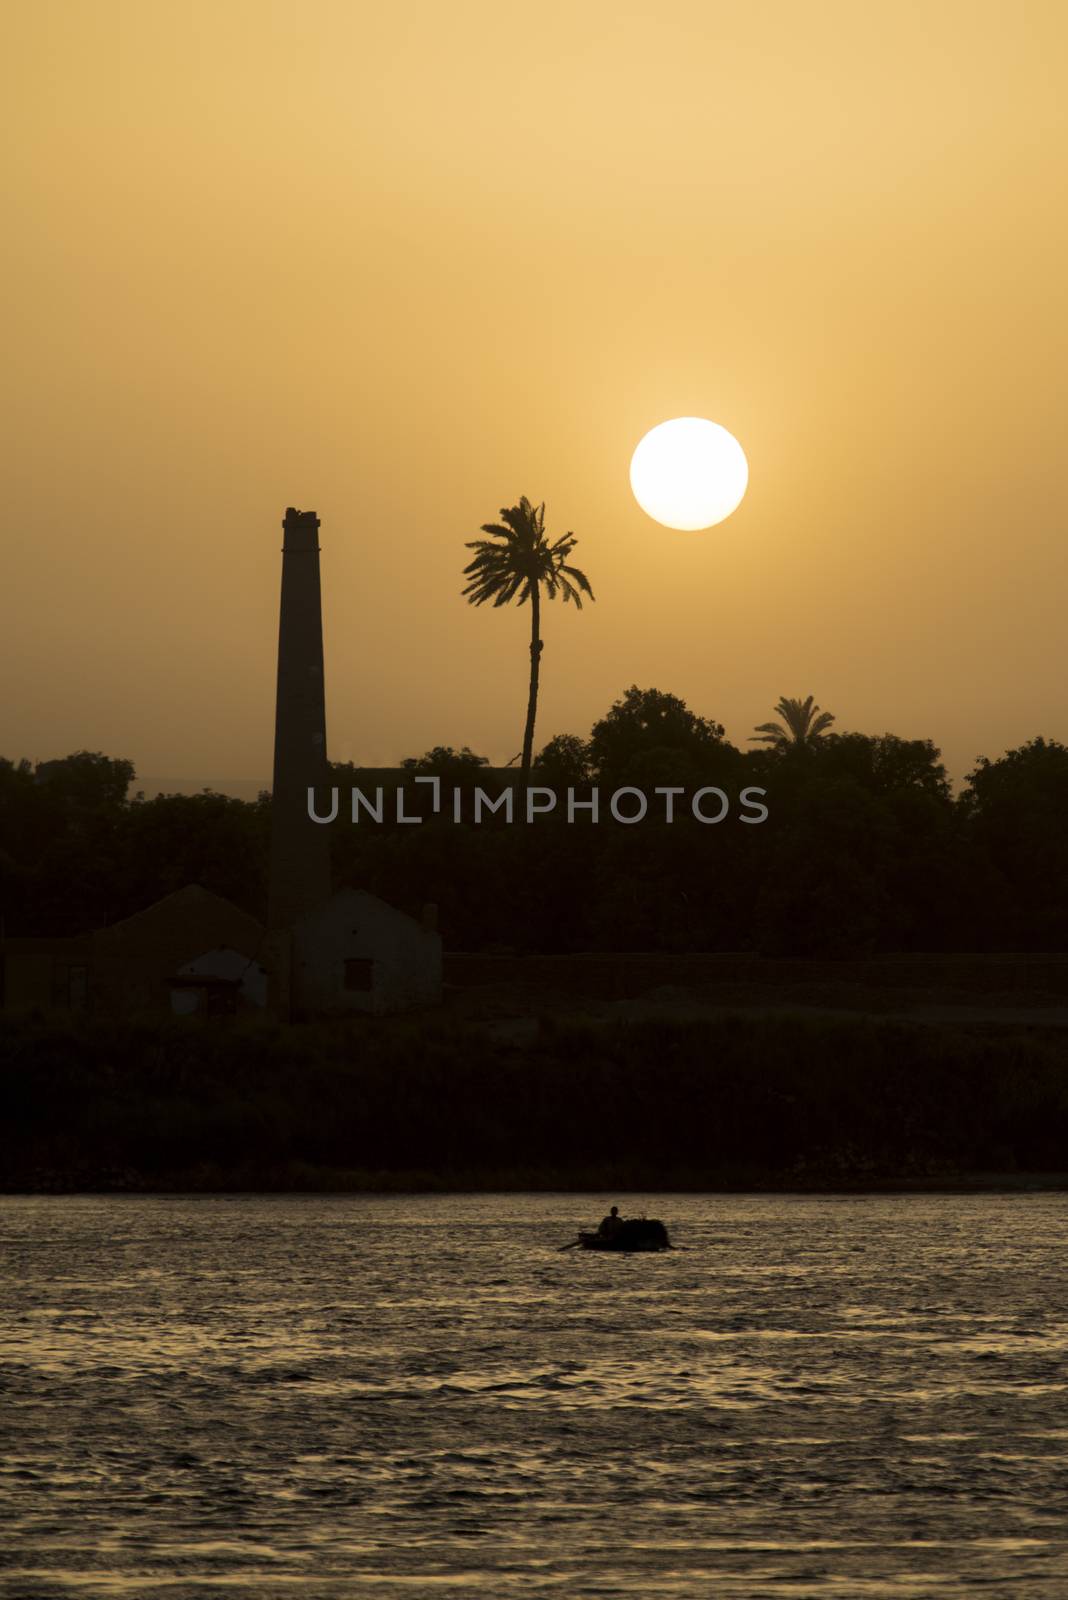 River bank silhouette at dusk sunset by paulvinten